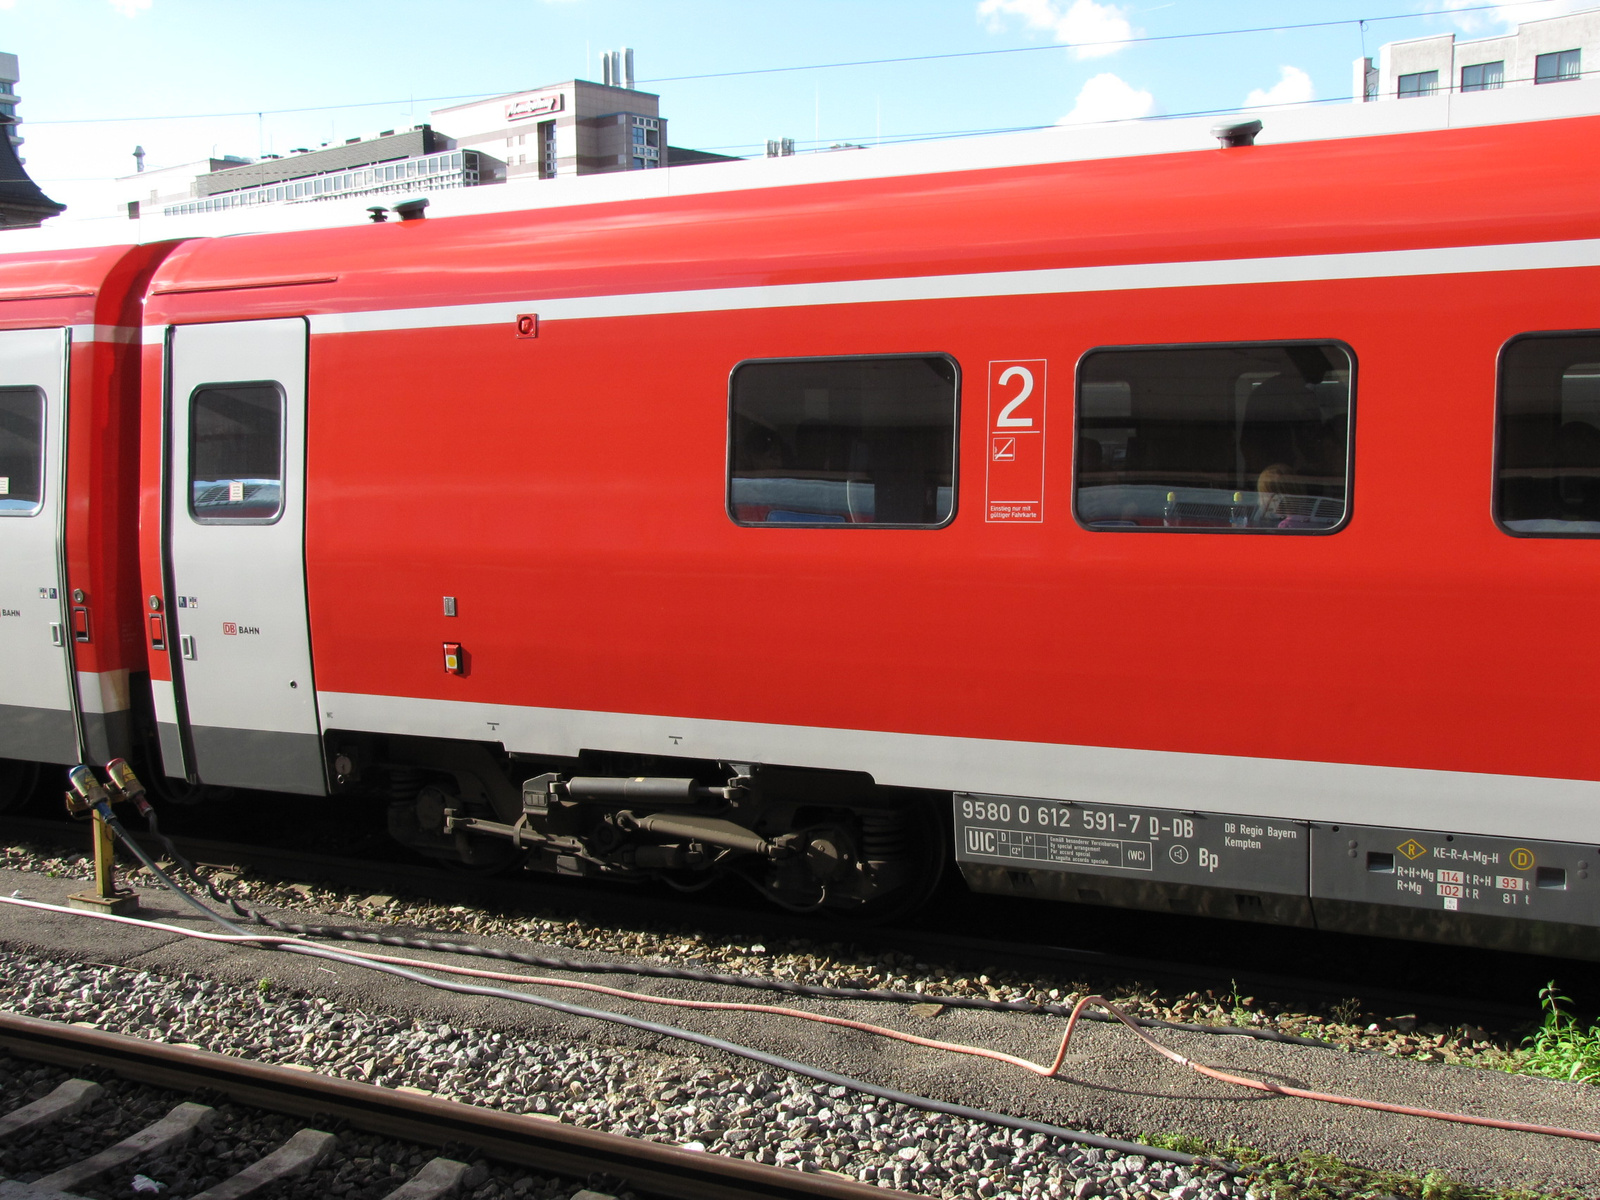 München, Hbf., D-DB 9580 0 612 591-7, SzG3